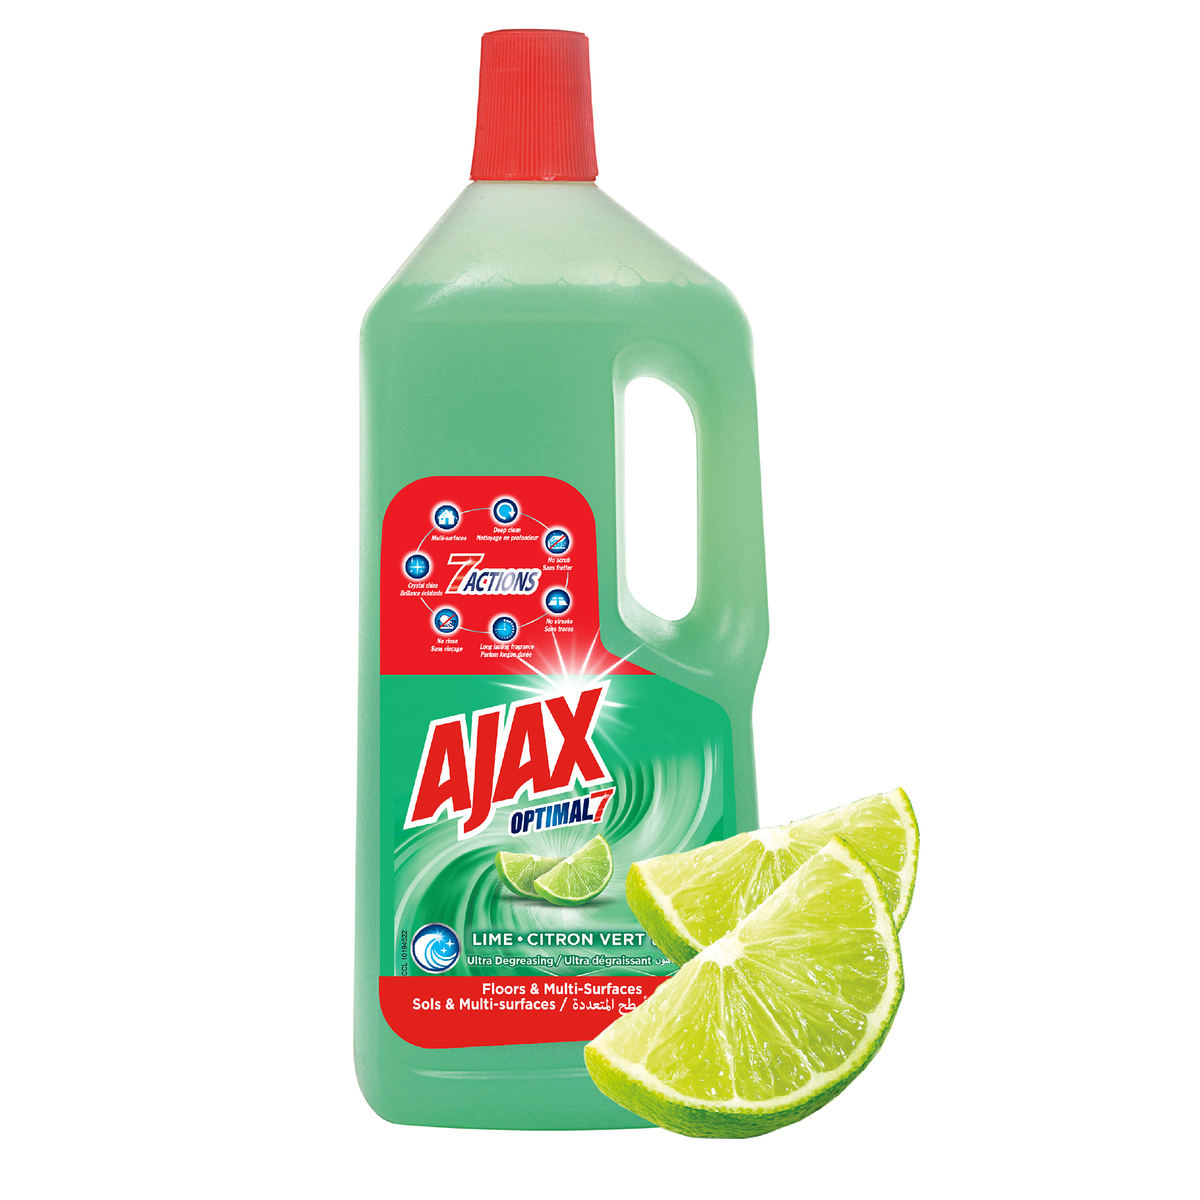 Ajax Floor & Multi-Surfaces Cleaner Optimal 7 Lime 2Litre